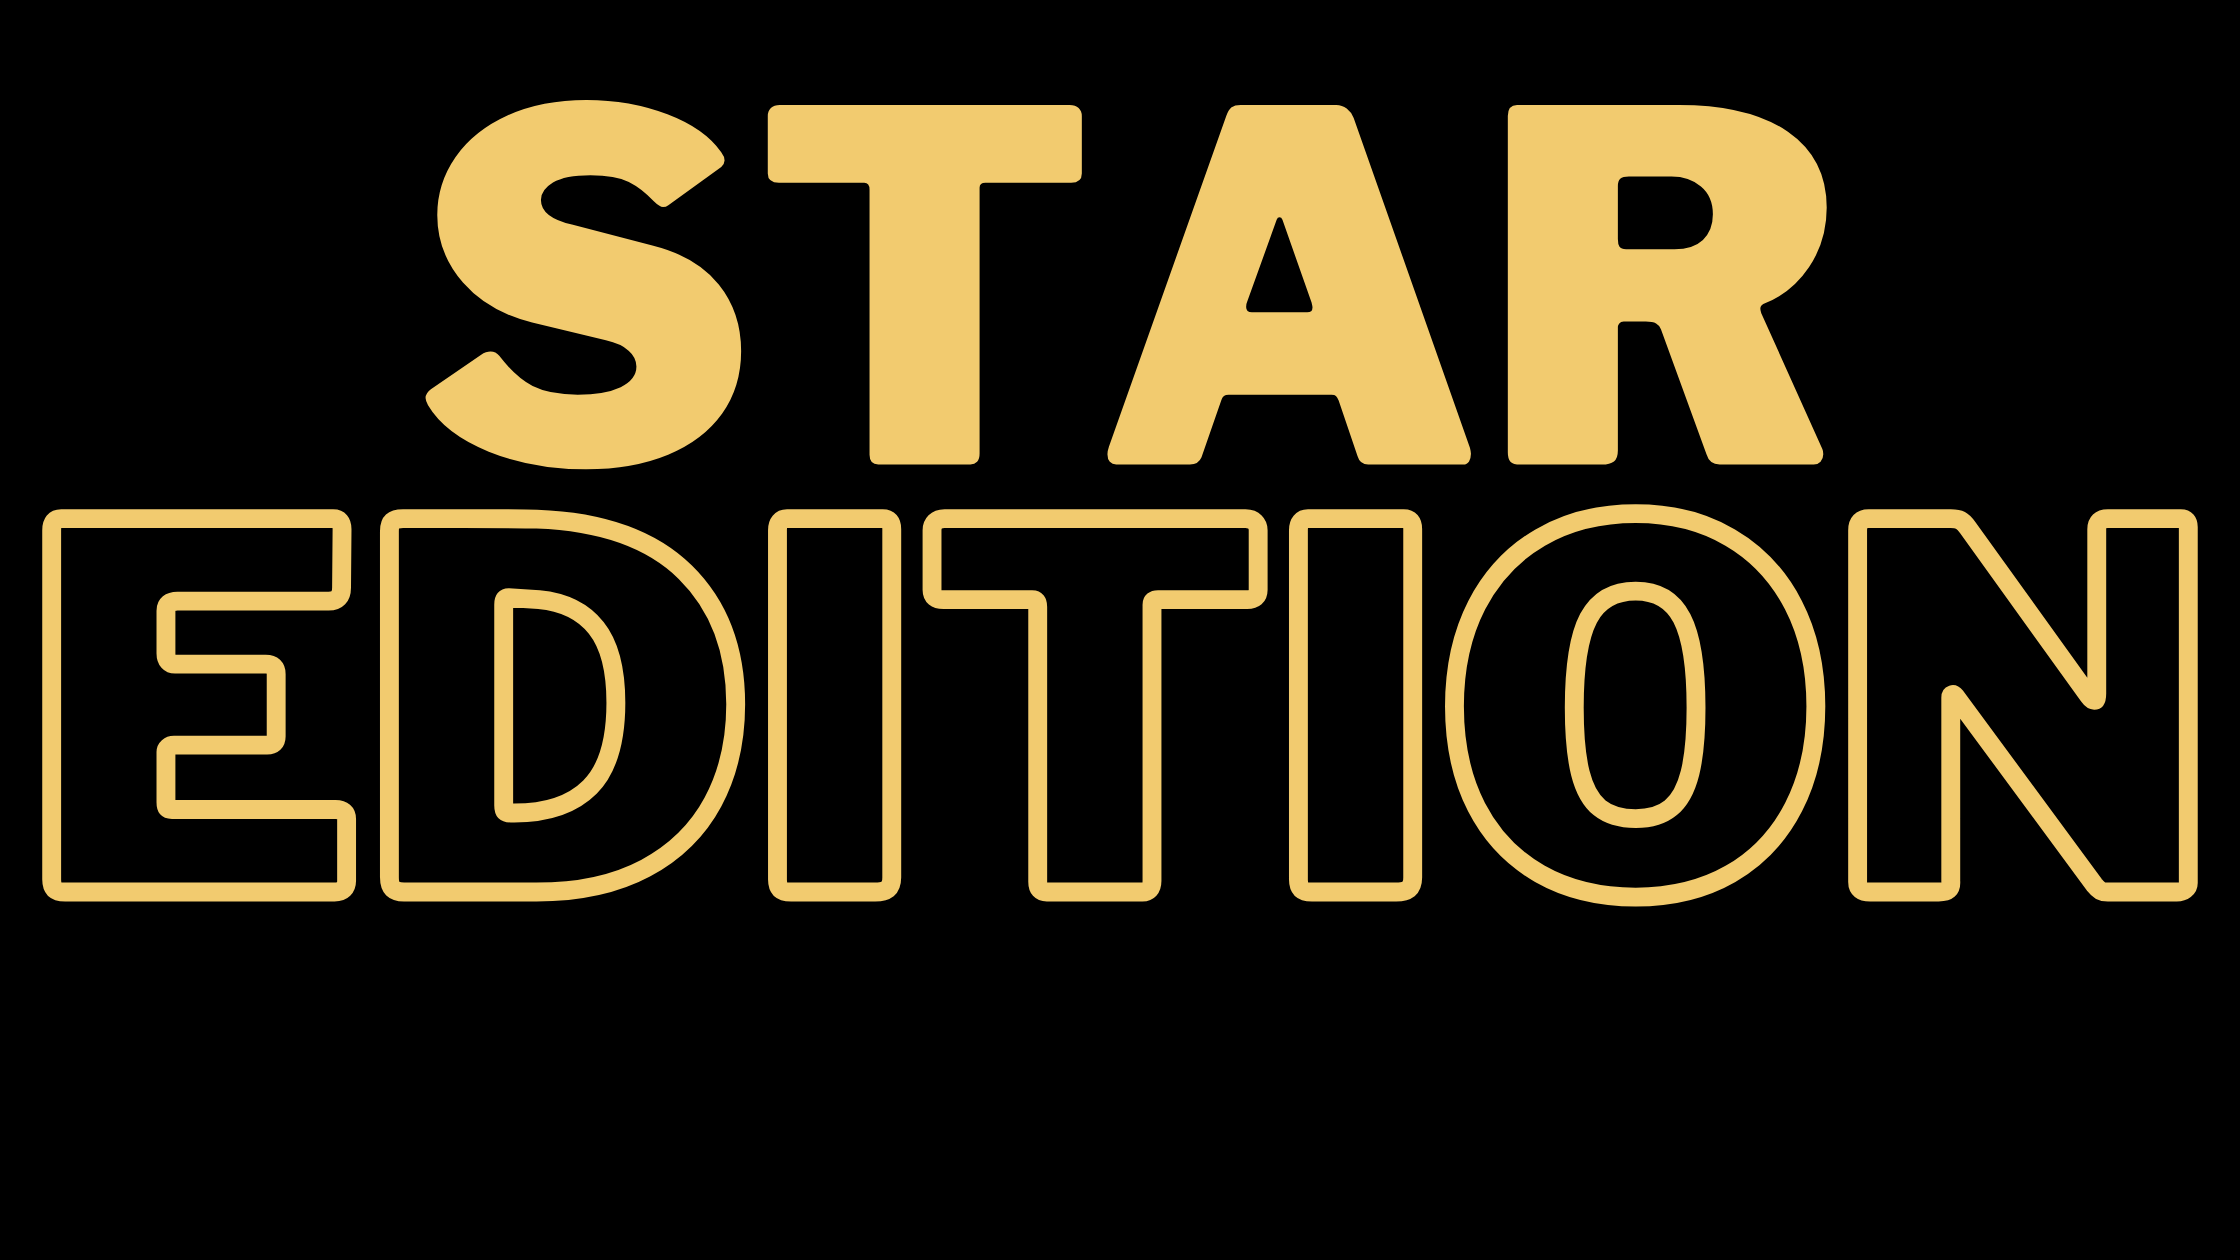 Star Edition